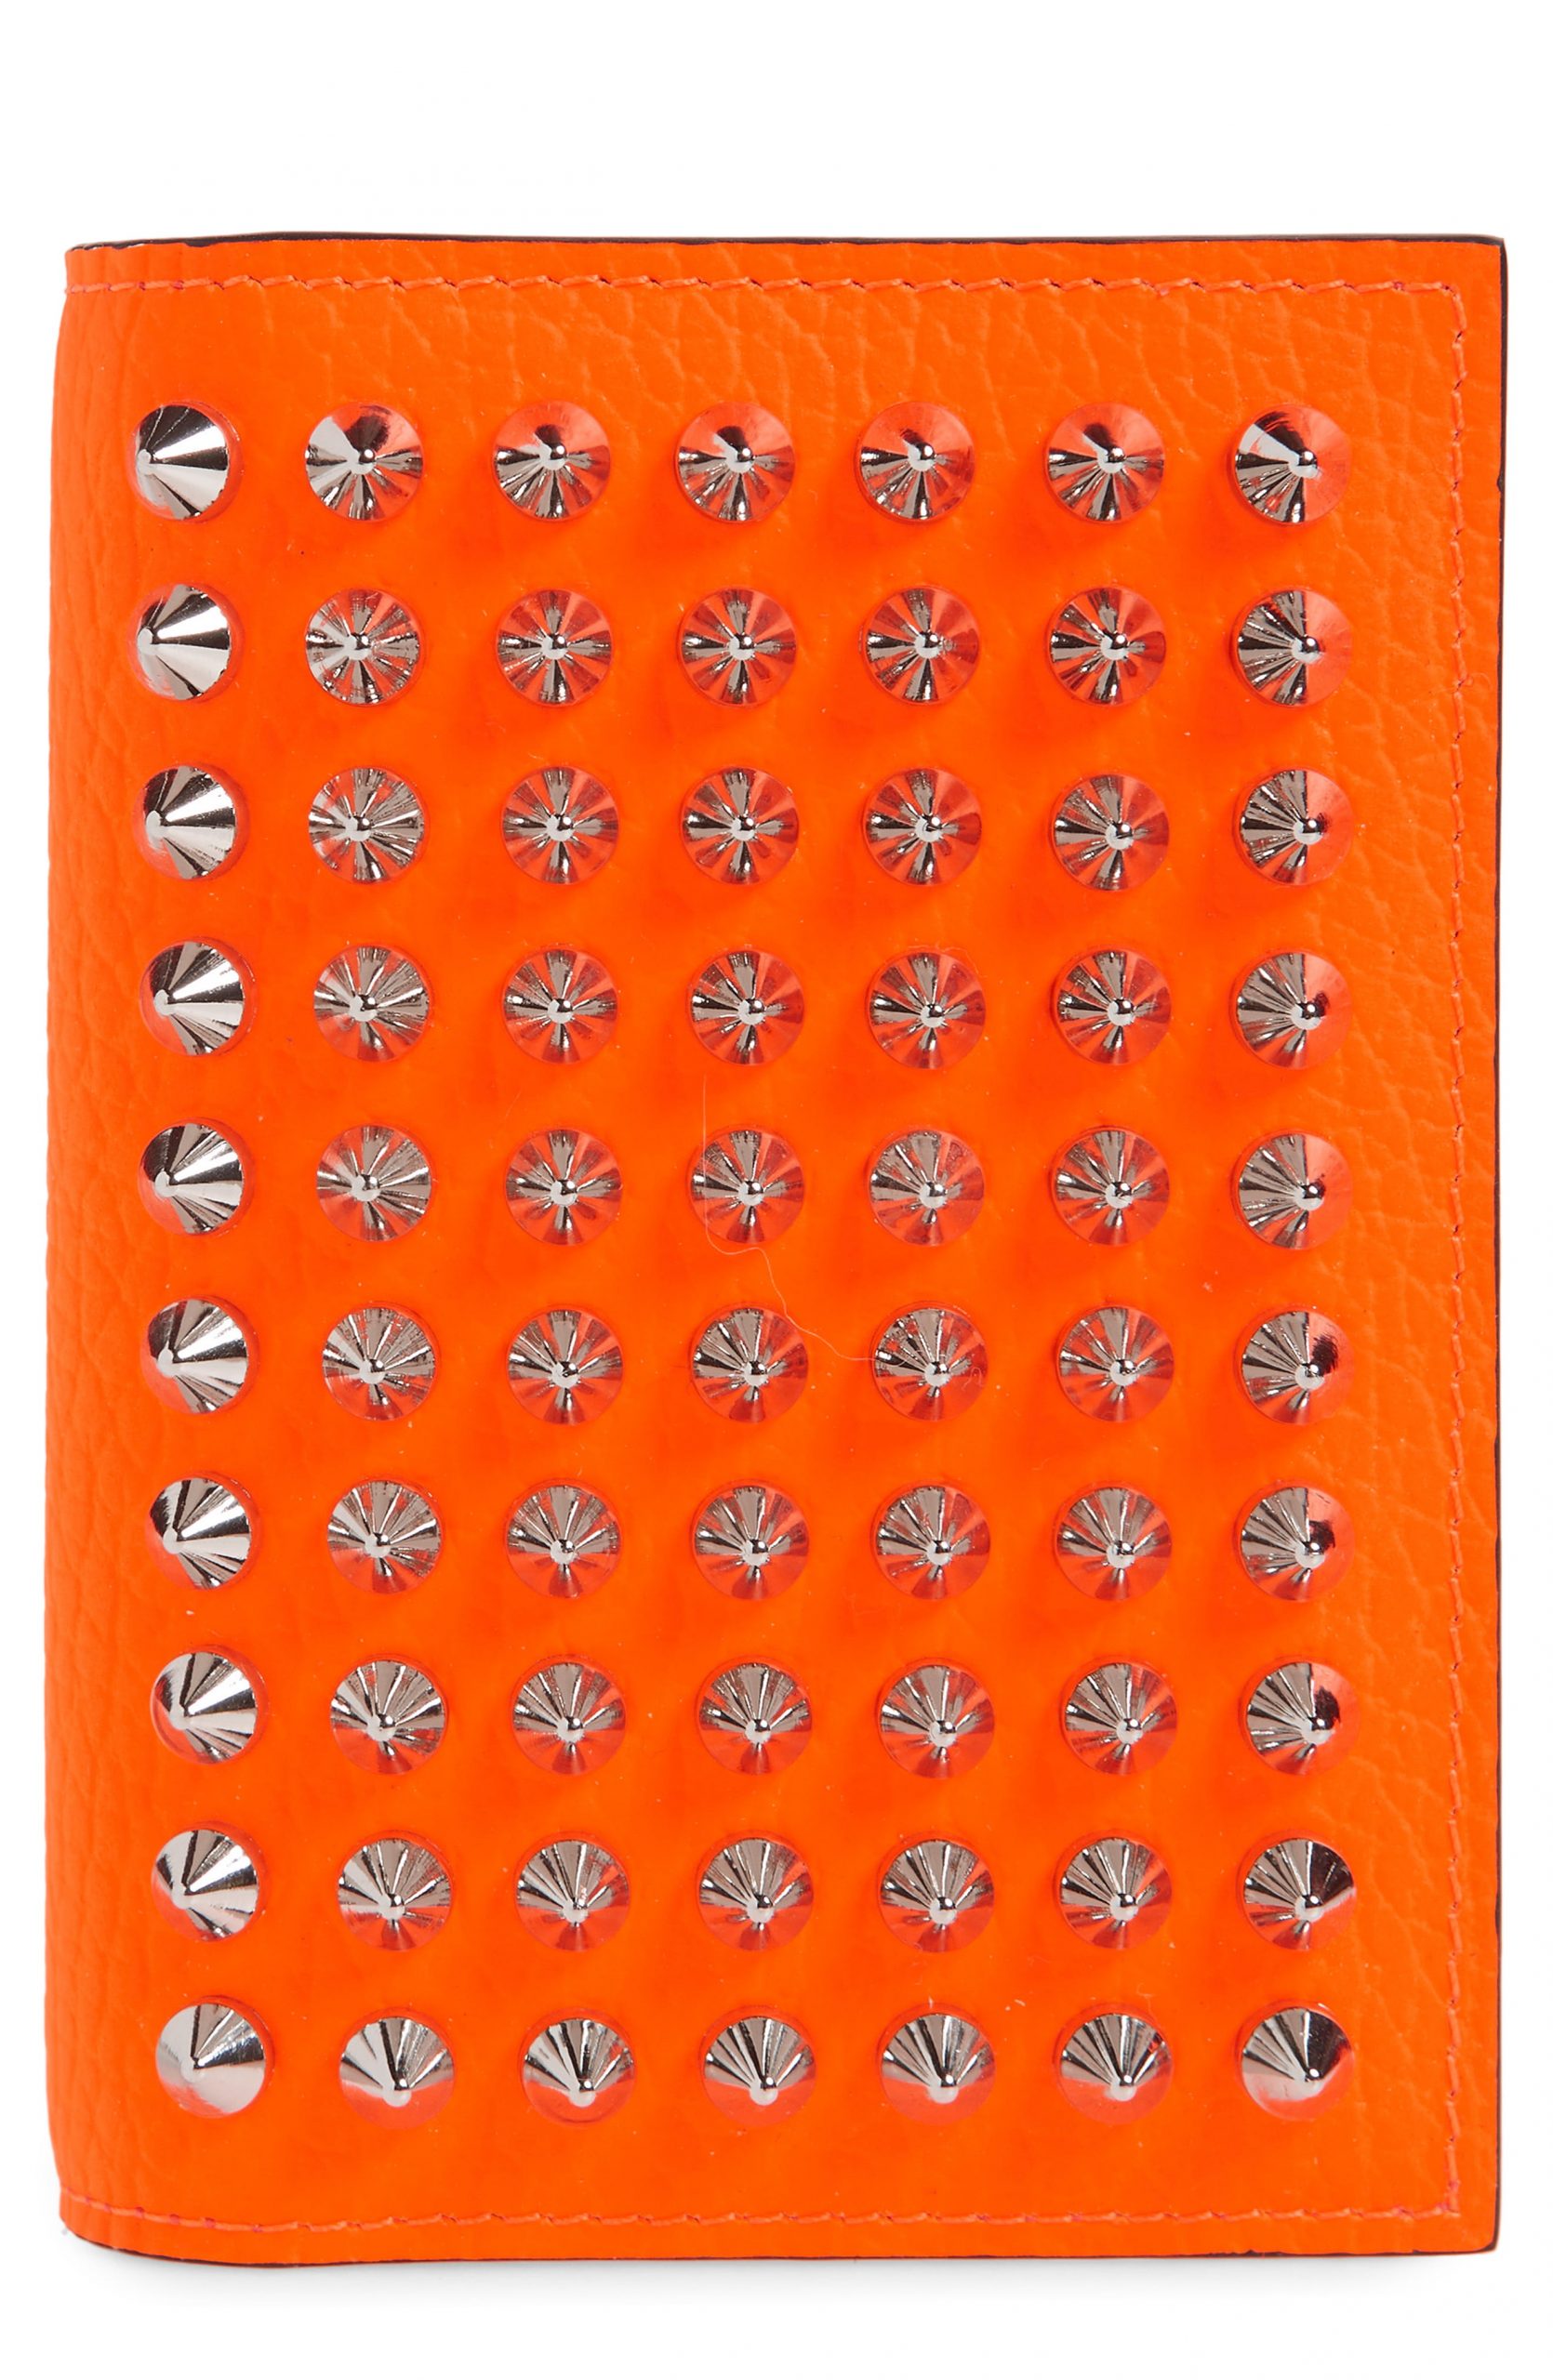 Men's Christian Louboutin Sifnos Studded Leather Card Holder Orange | Fashion Gone Rogue